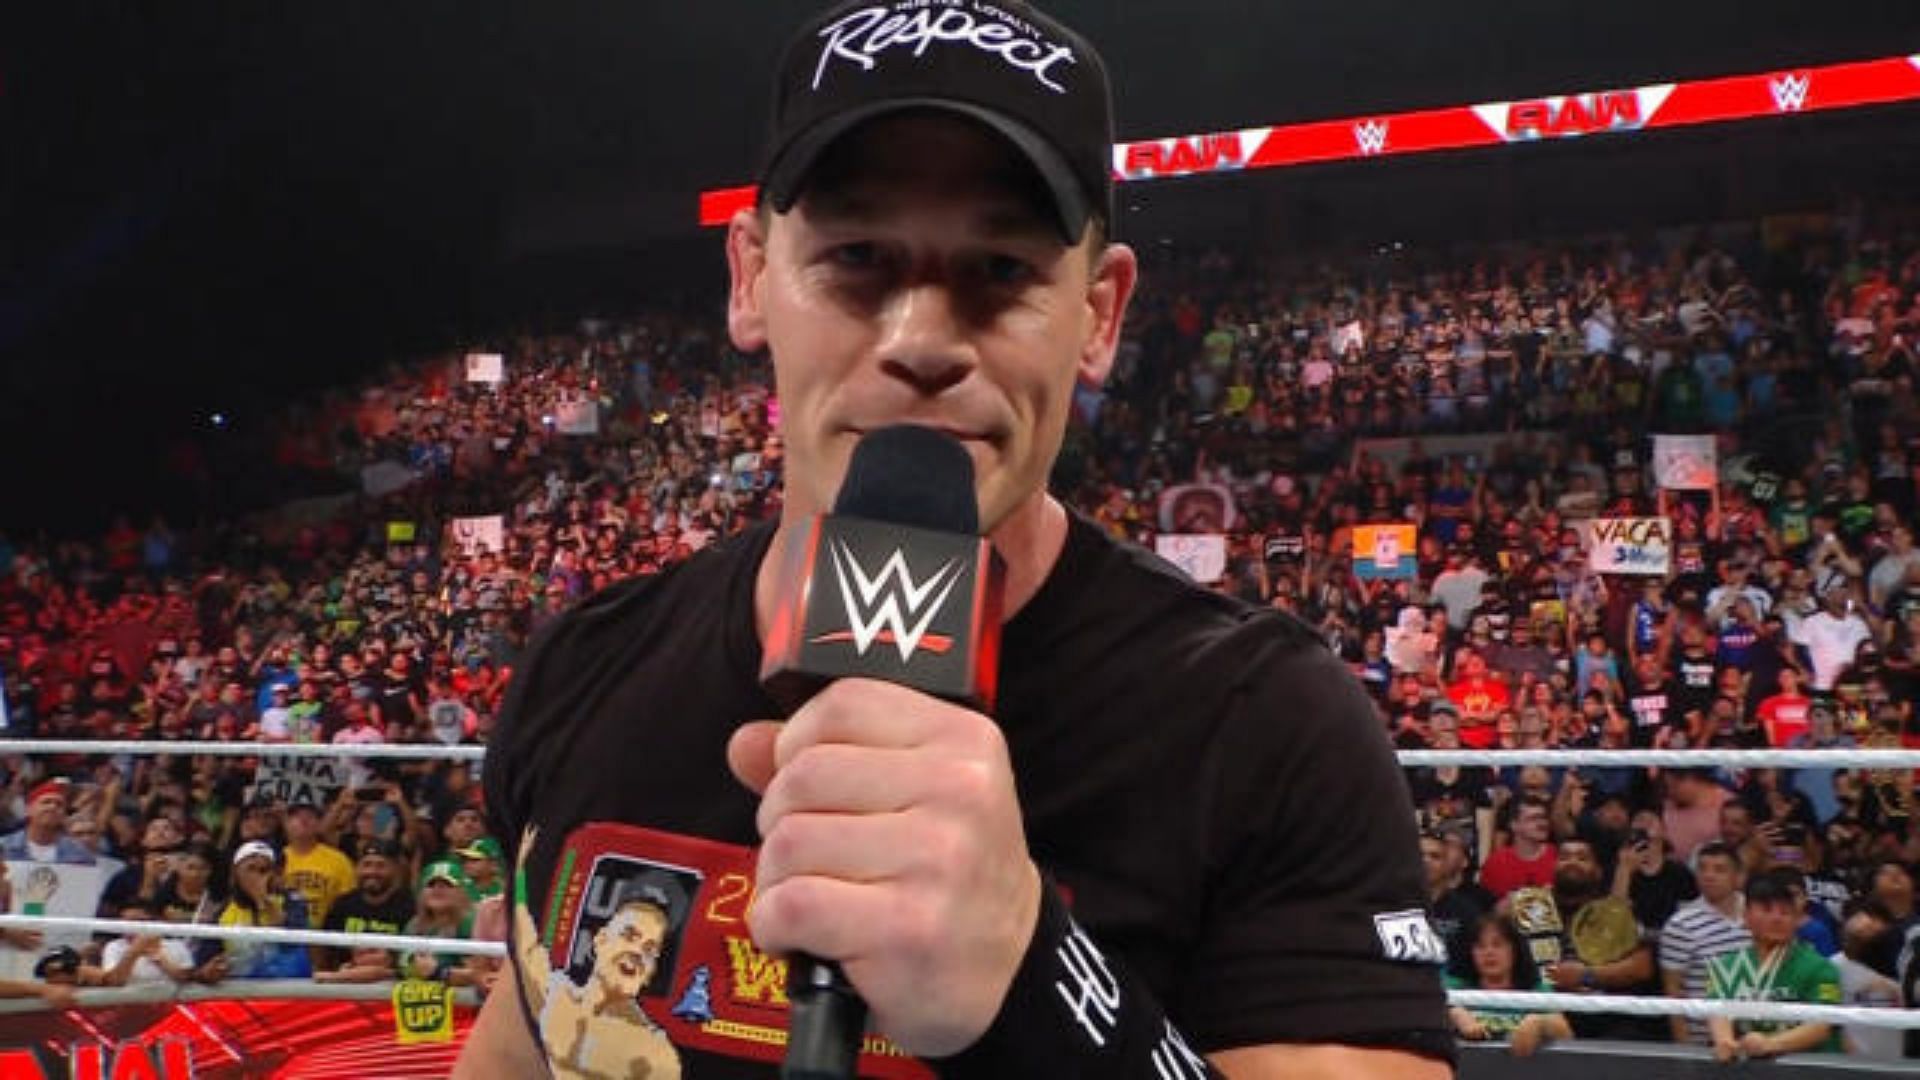 16-time world champion John Cena on RAW